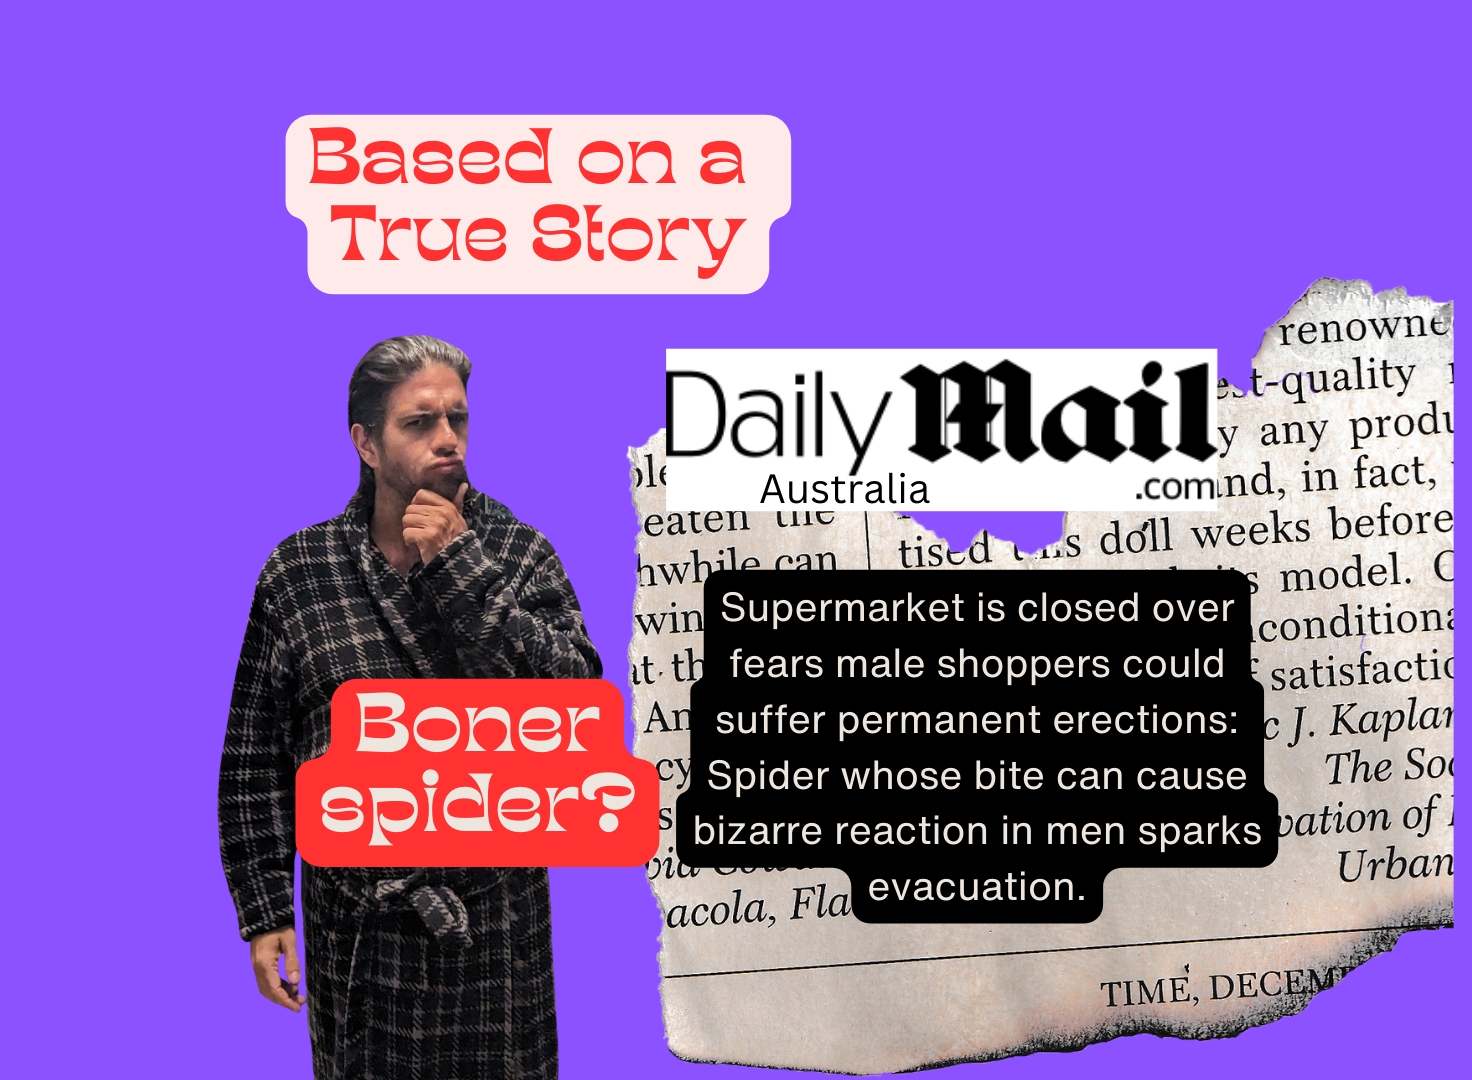 The boner spider - #truestory